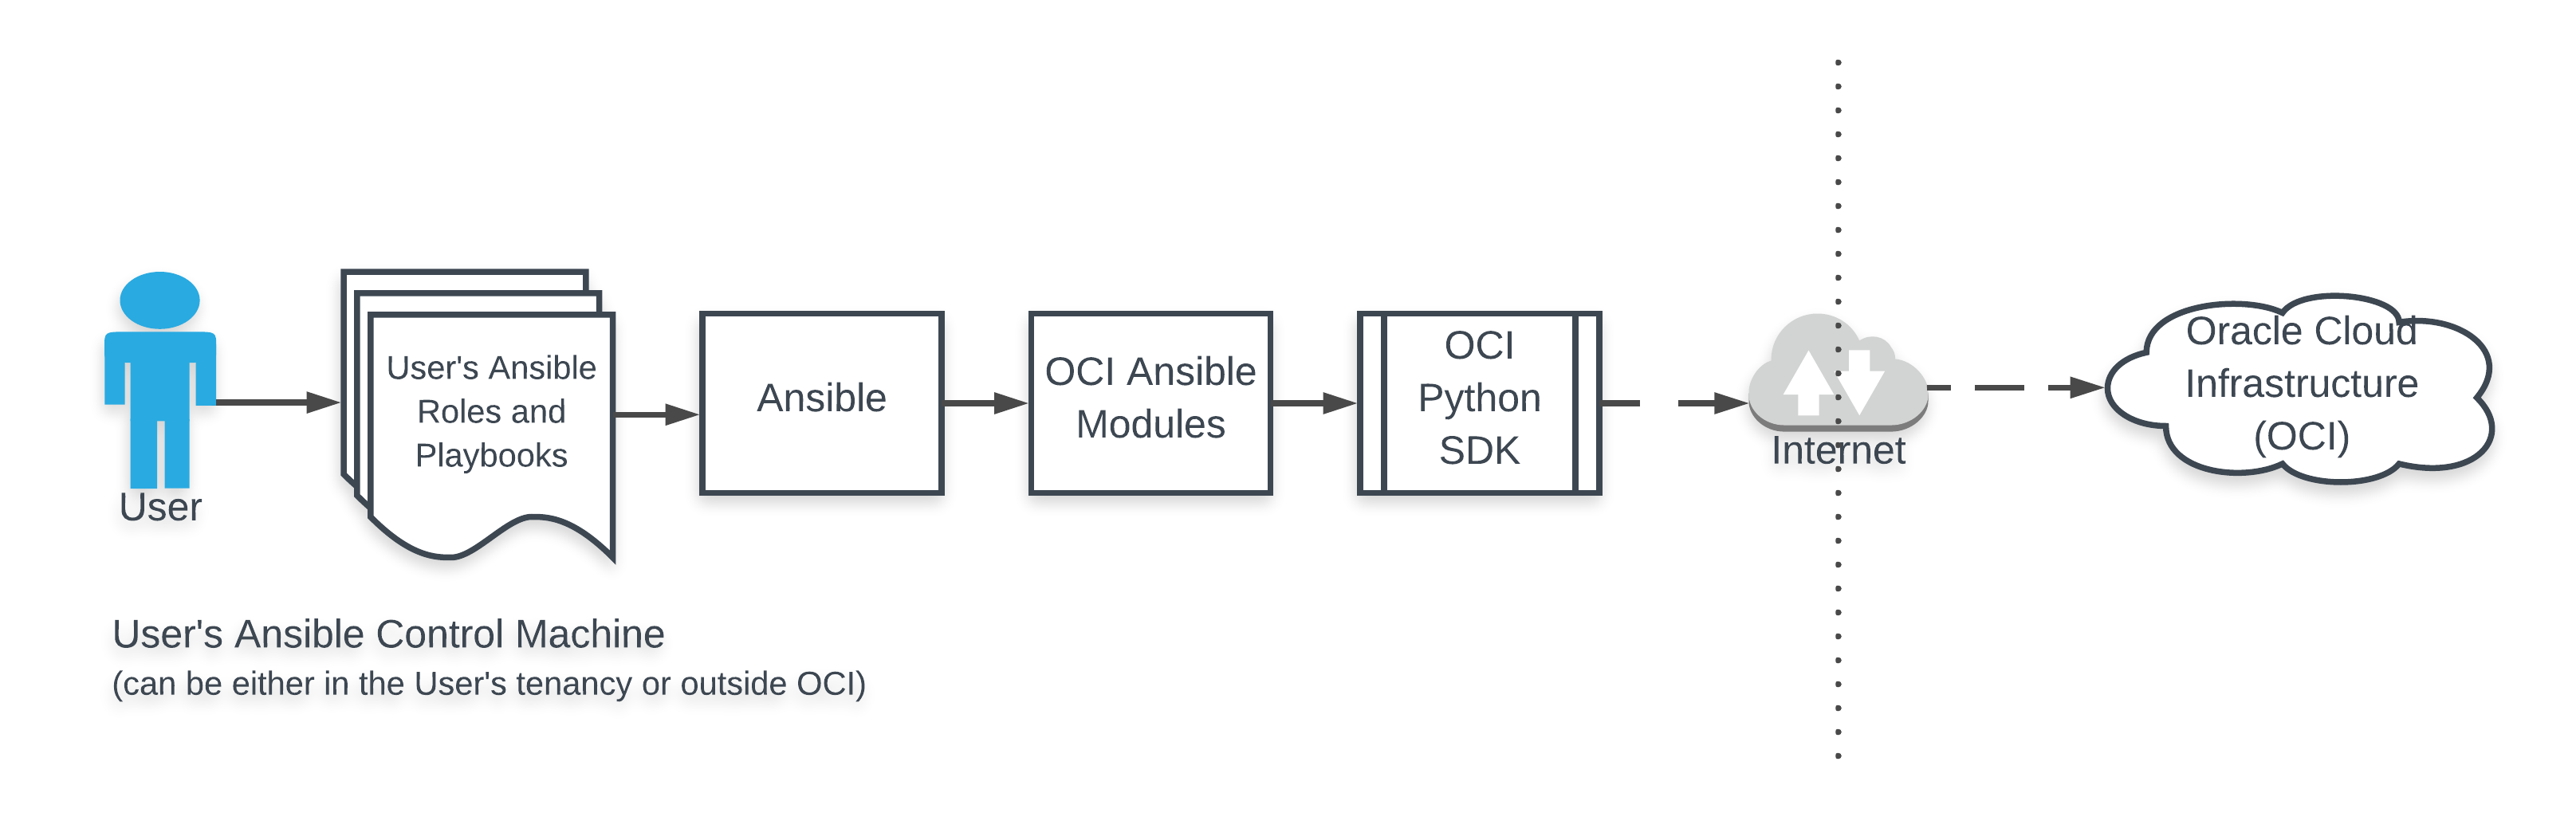 OCI ansible modules architecture diagram